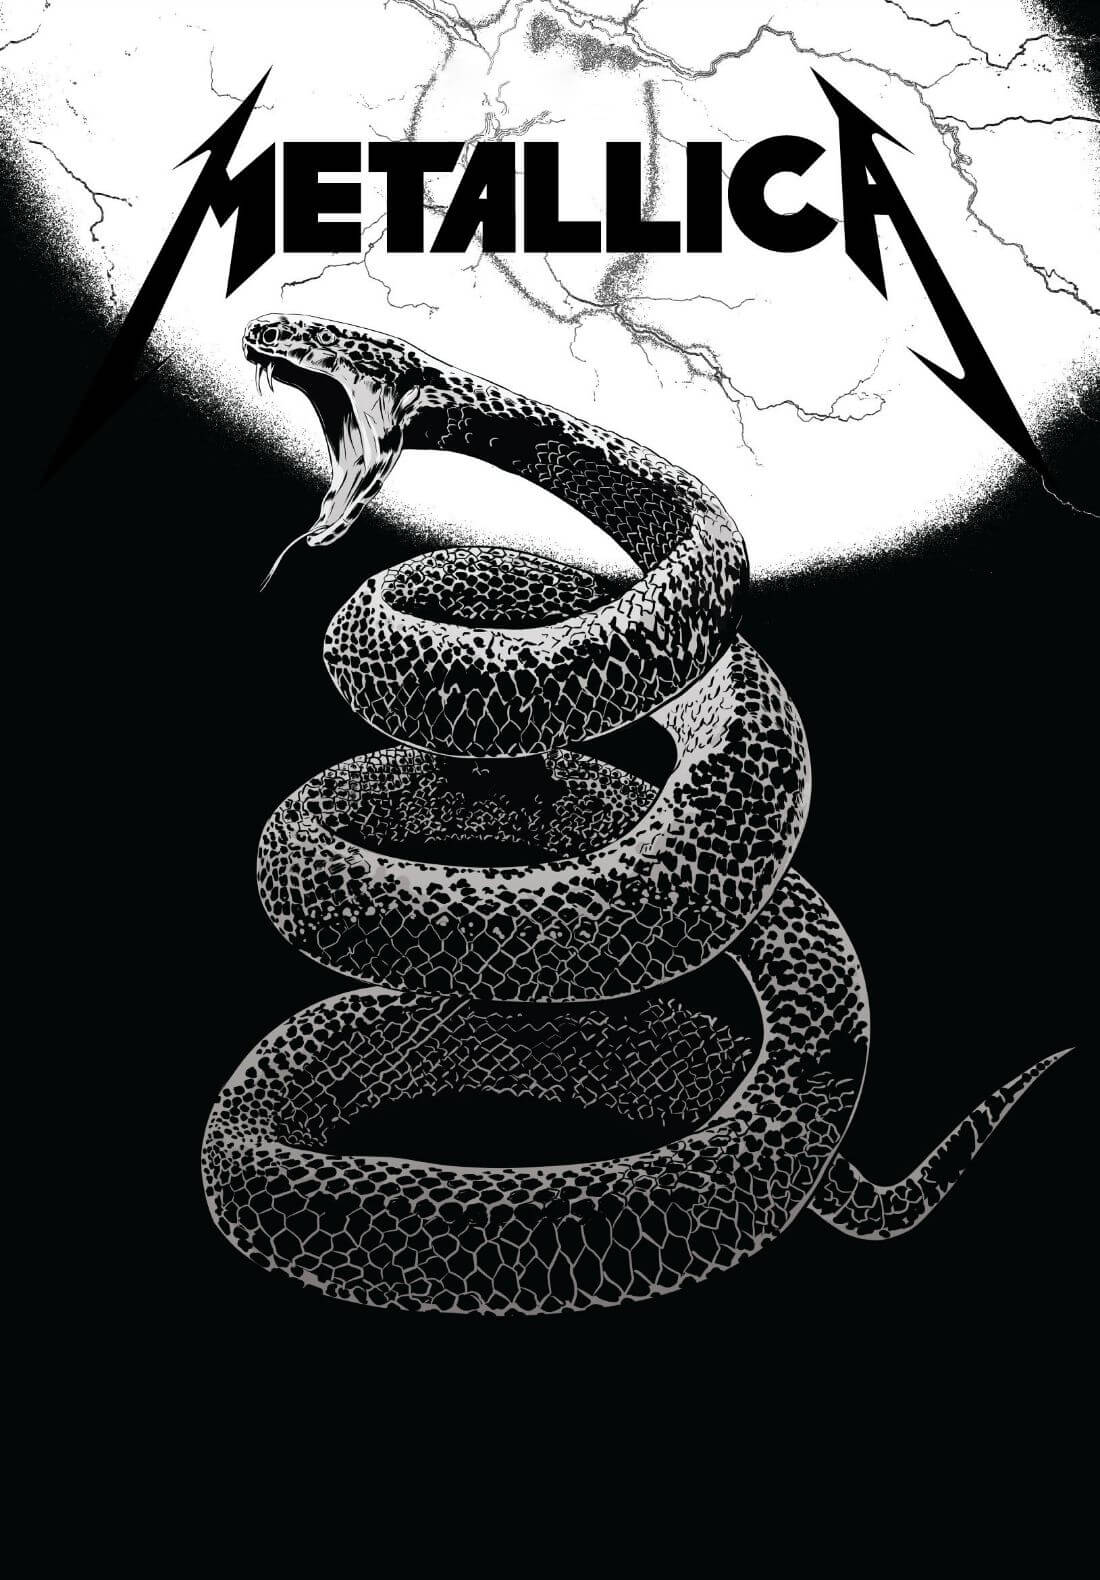 Metallica - Black Album - Rock and Metal Music Concert Poster ...